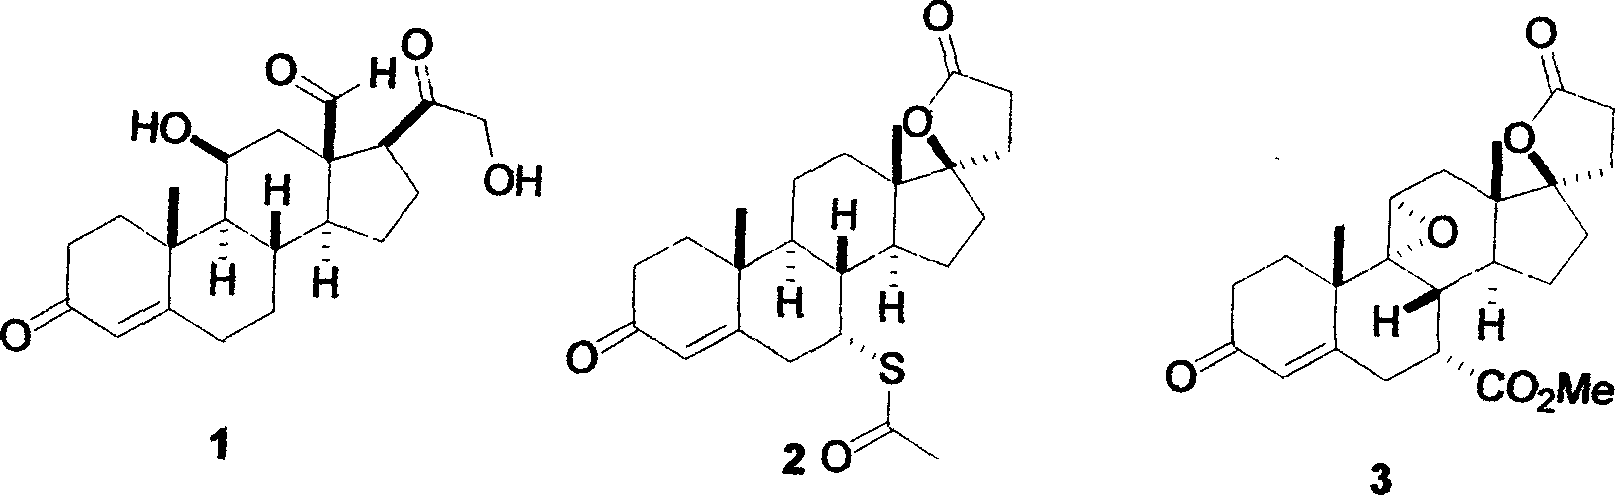 Synthetic method for eplerenone